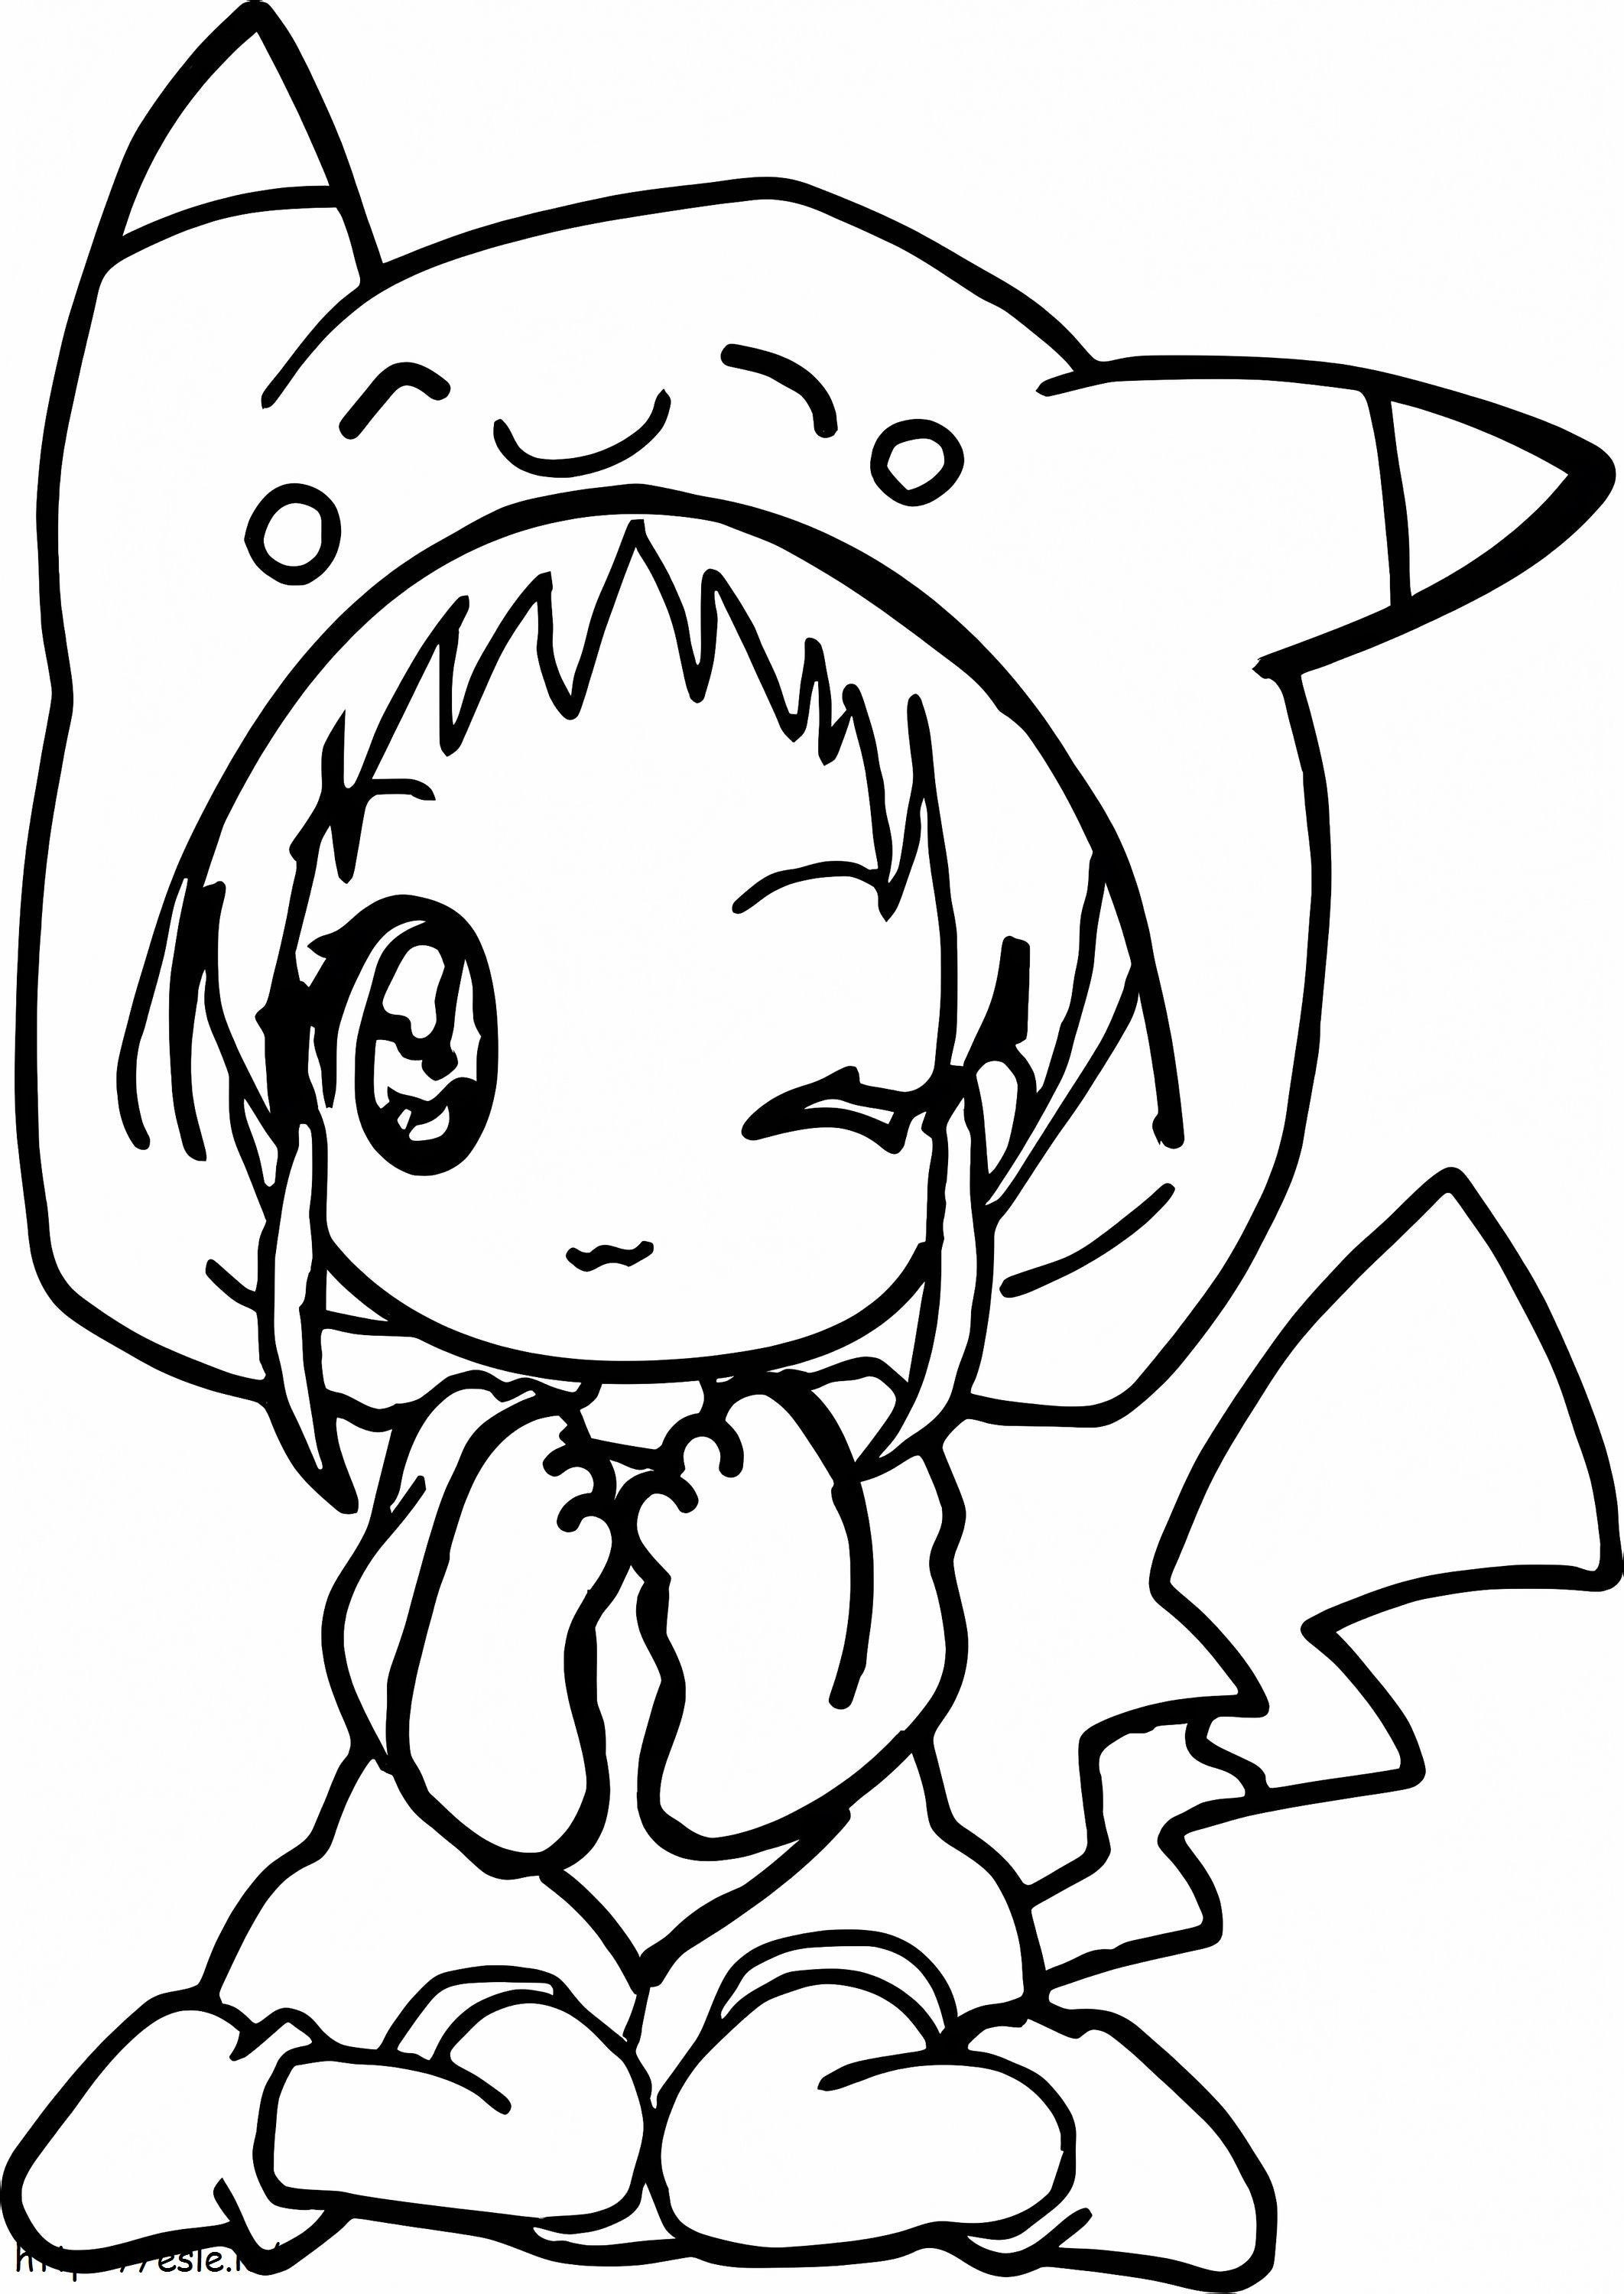 Chica Pikachu Kawaii para colorear